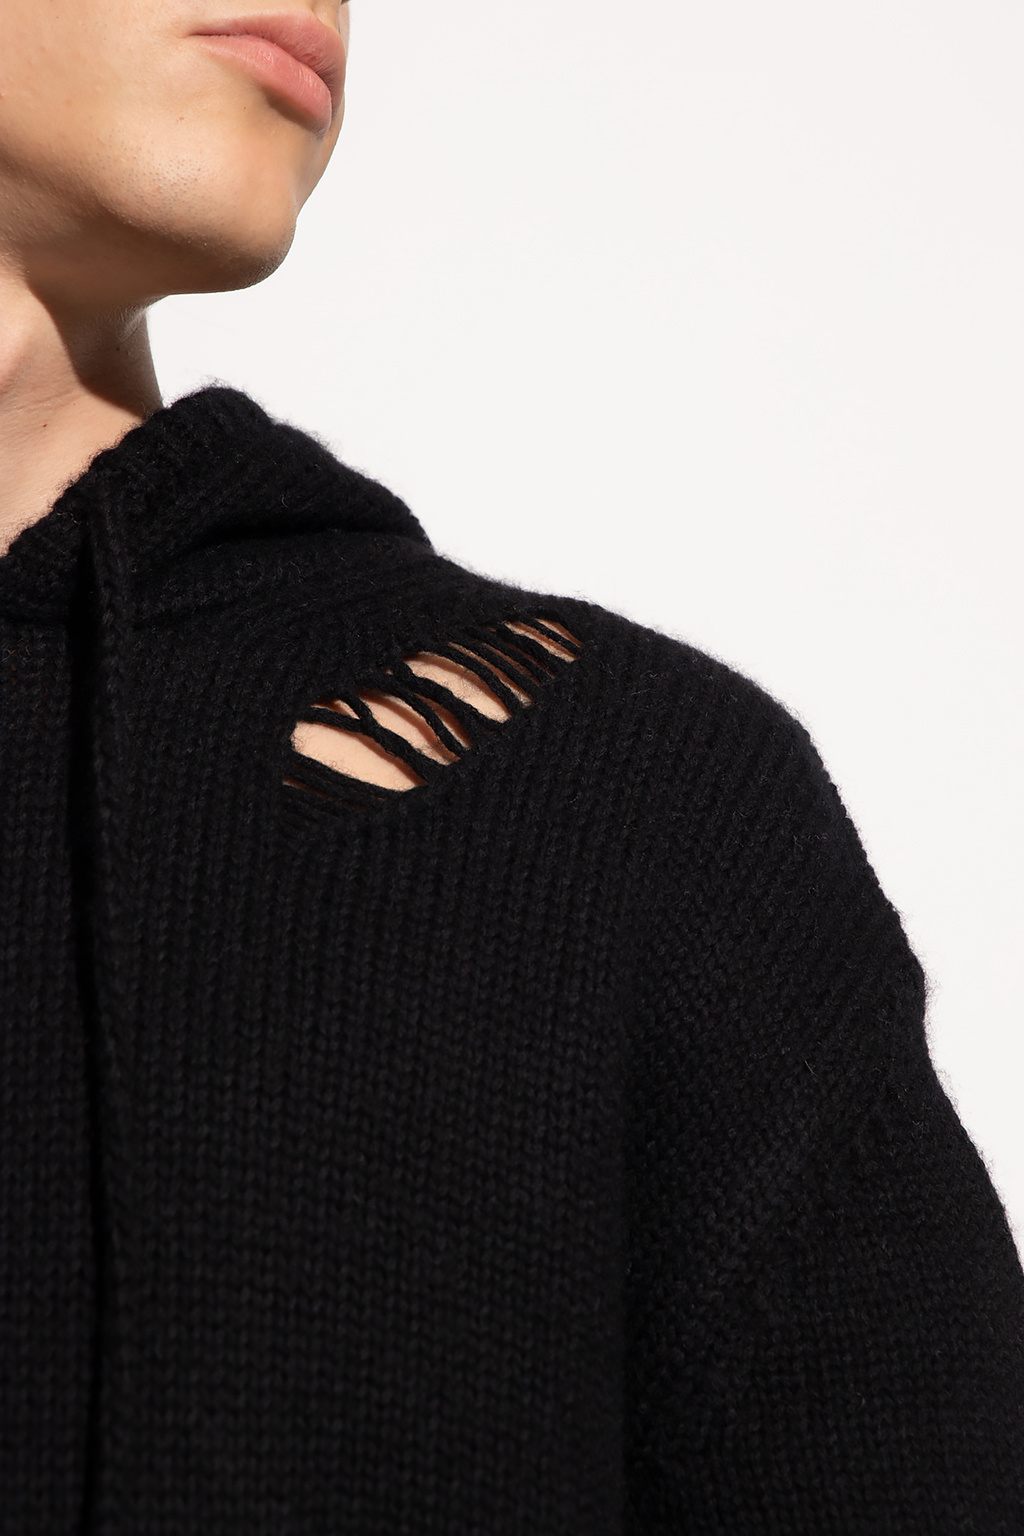 Iro ‘Noris’ hooded Black sweater